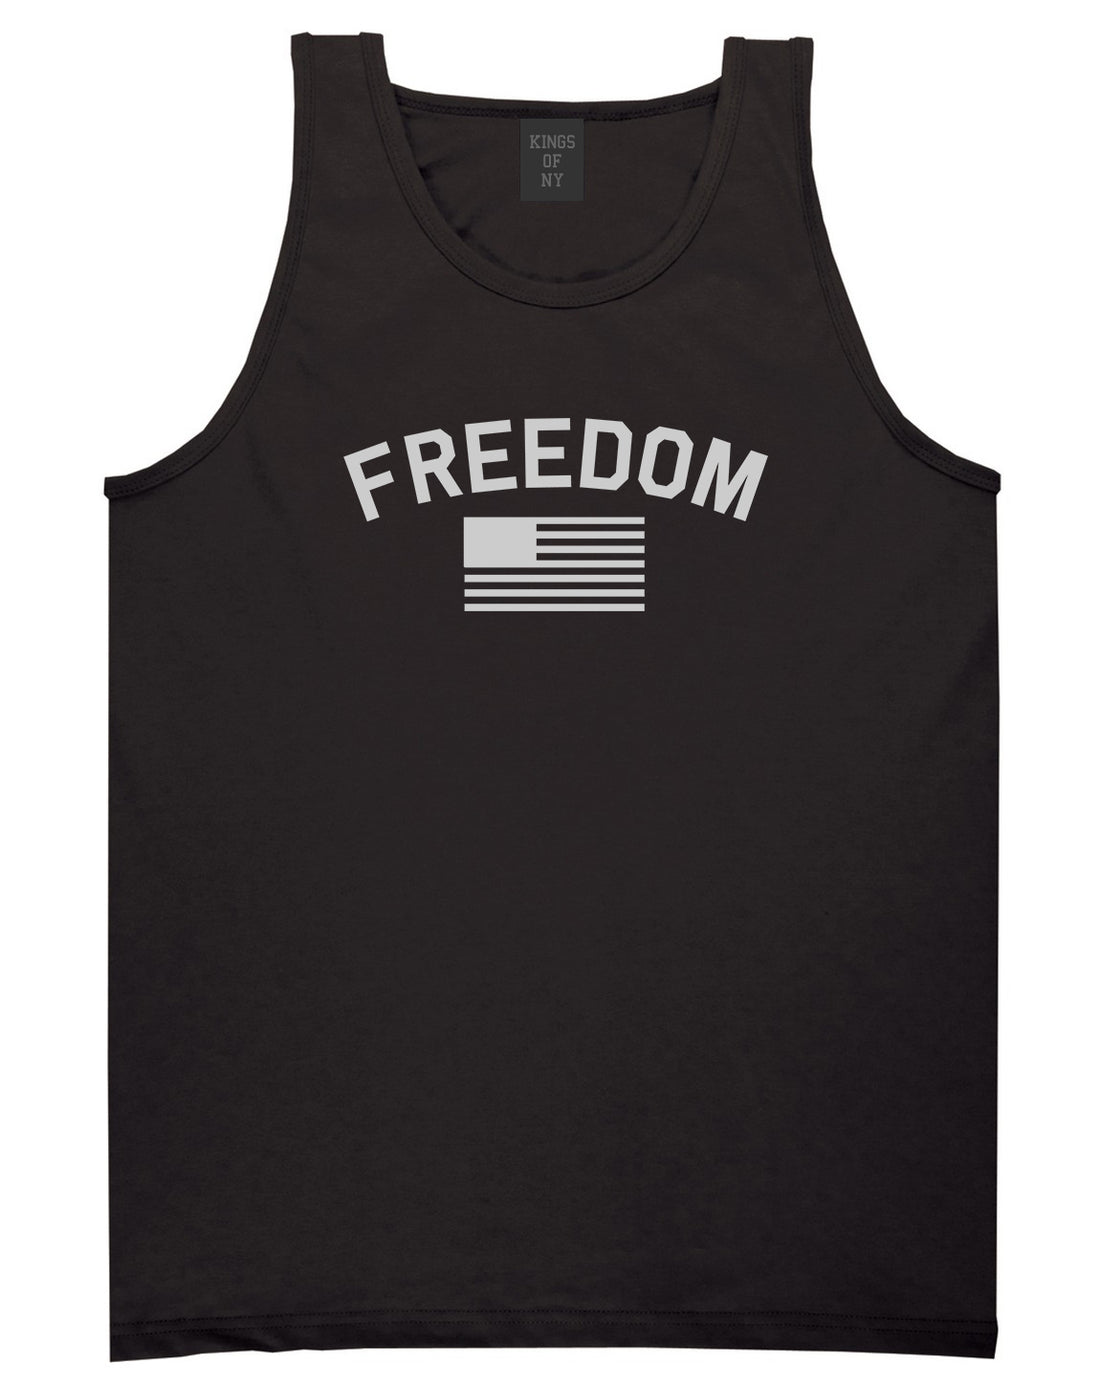 Freedom Flag Mens Black Tank Top Shirt by KINGS OF NY